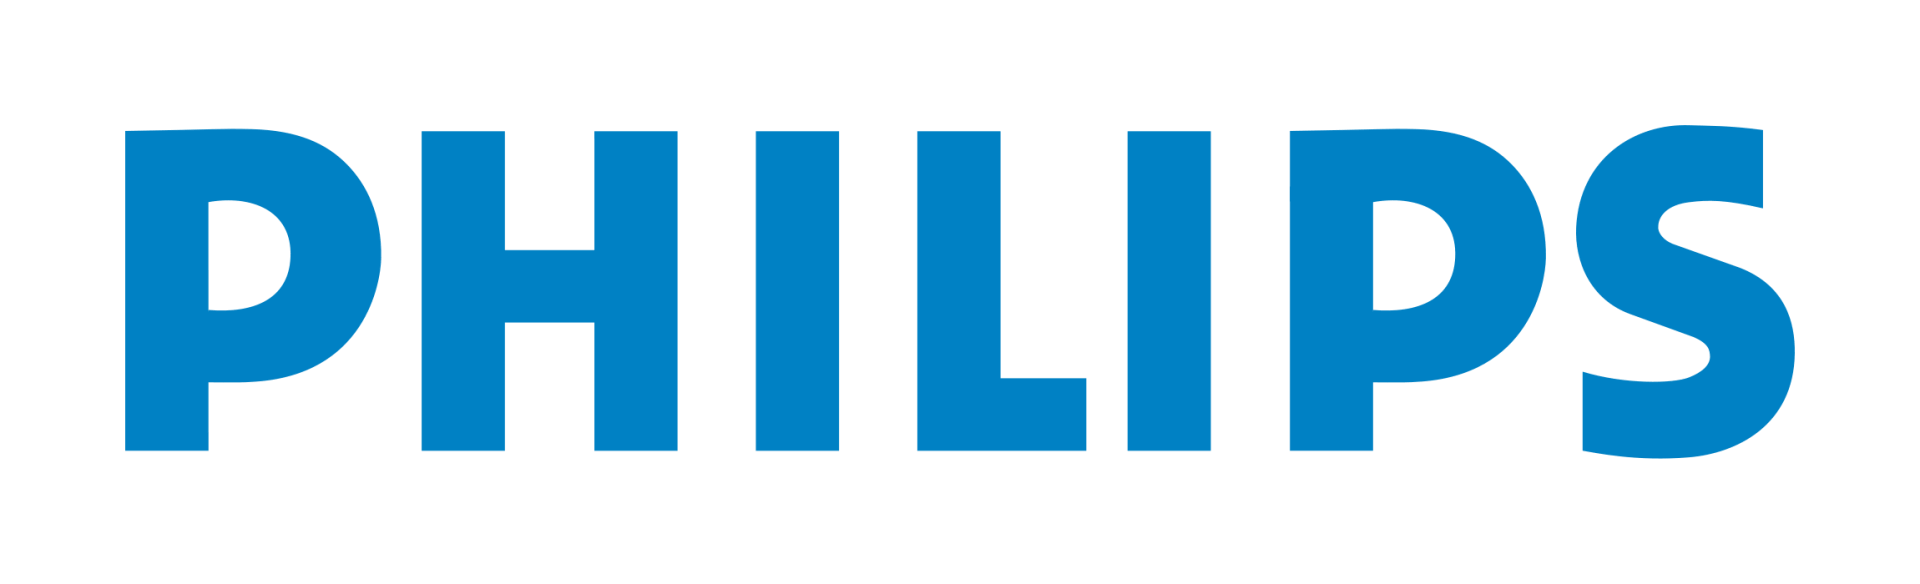 philips logo - ReNew BioMedical